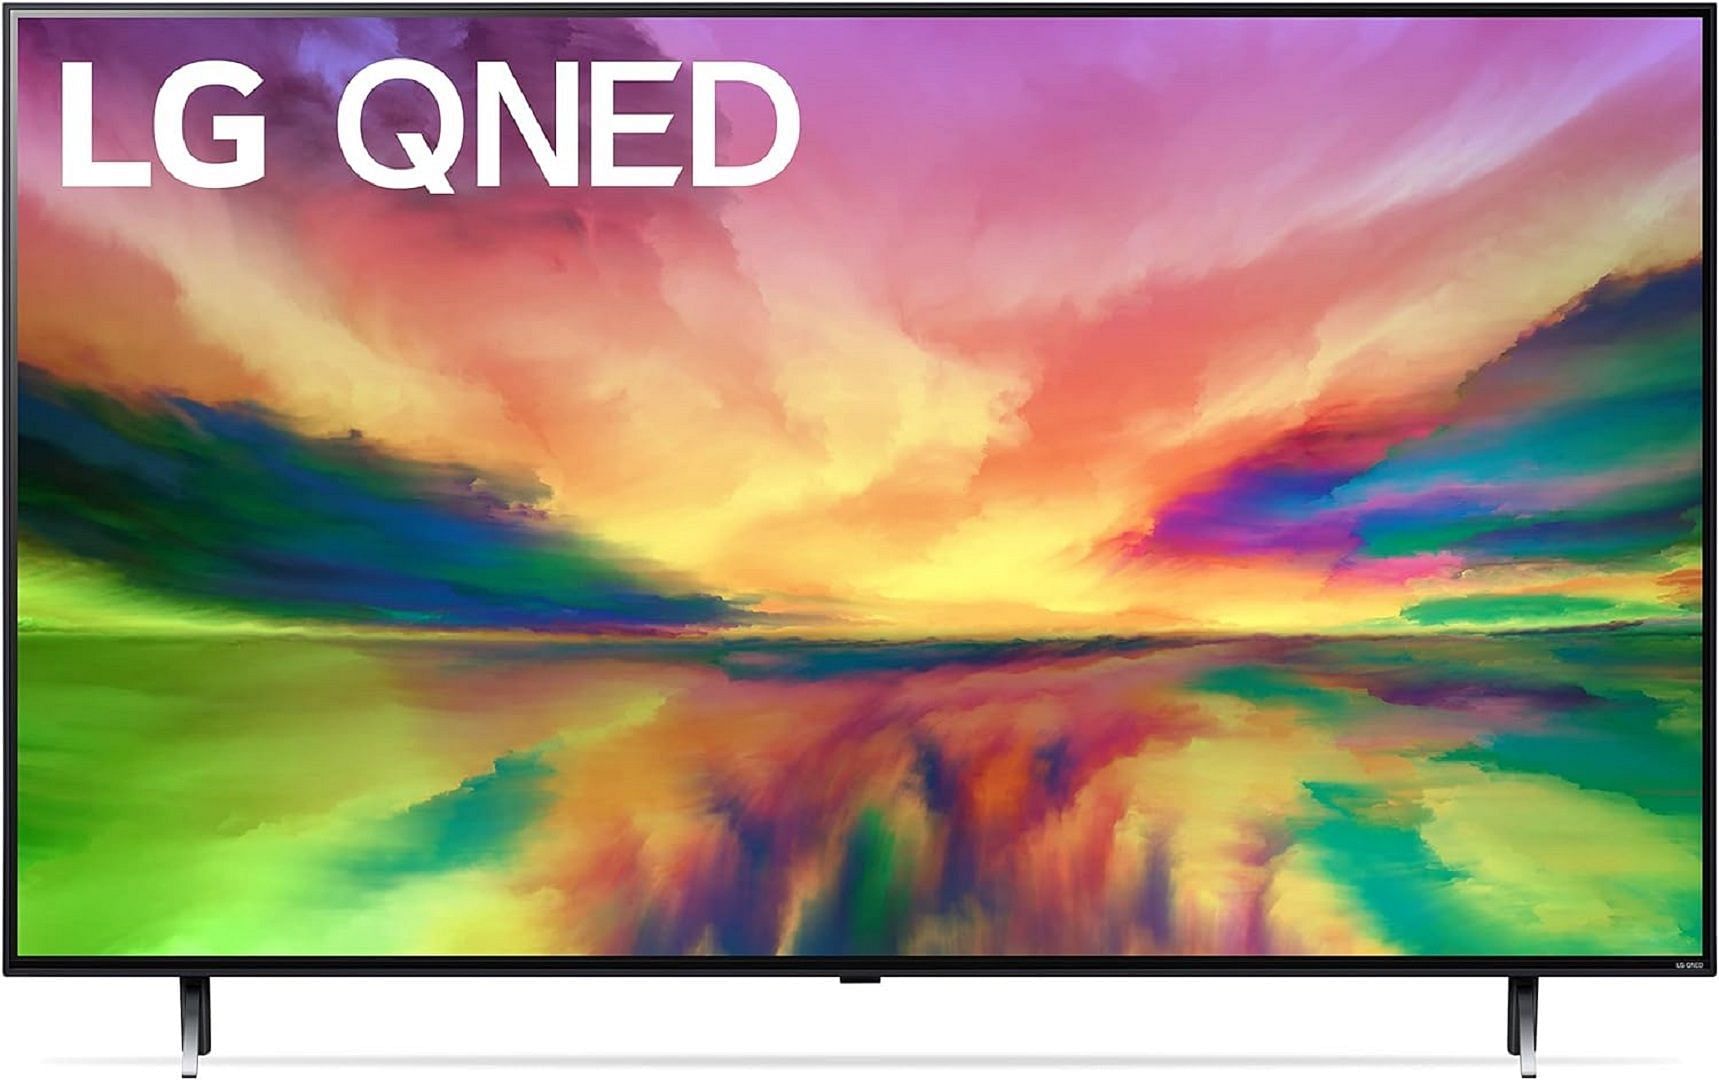 LG QNED80 65-inch QNED TV (Image via LG)